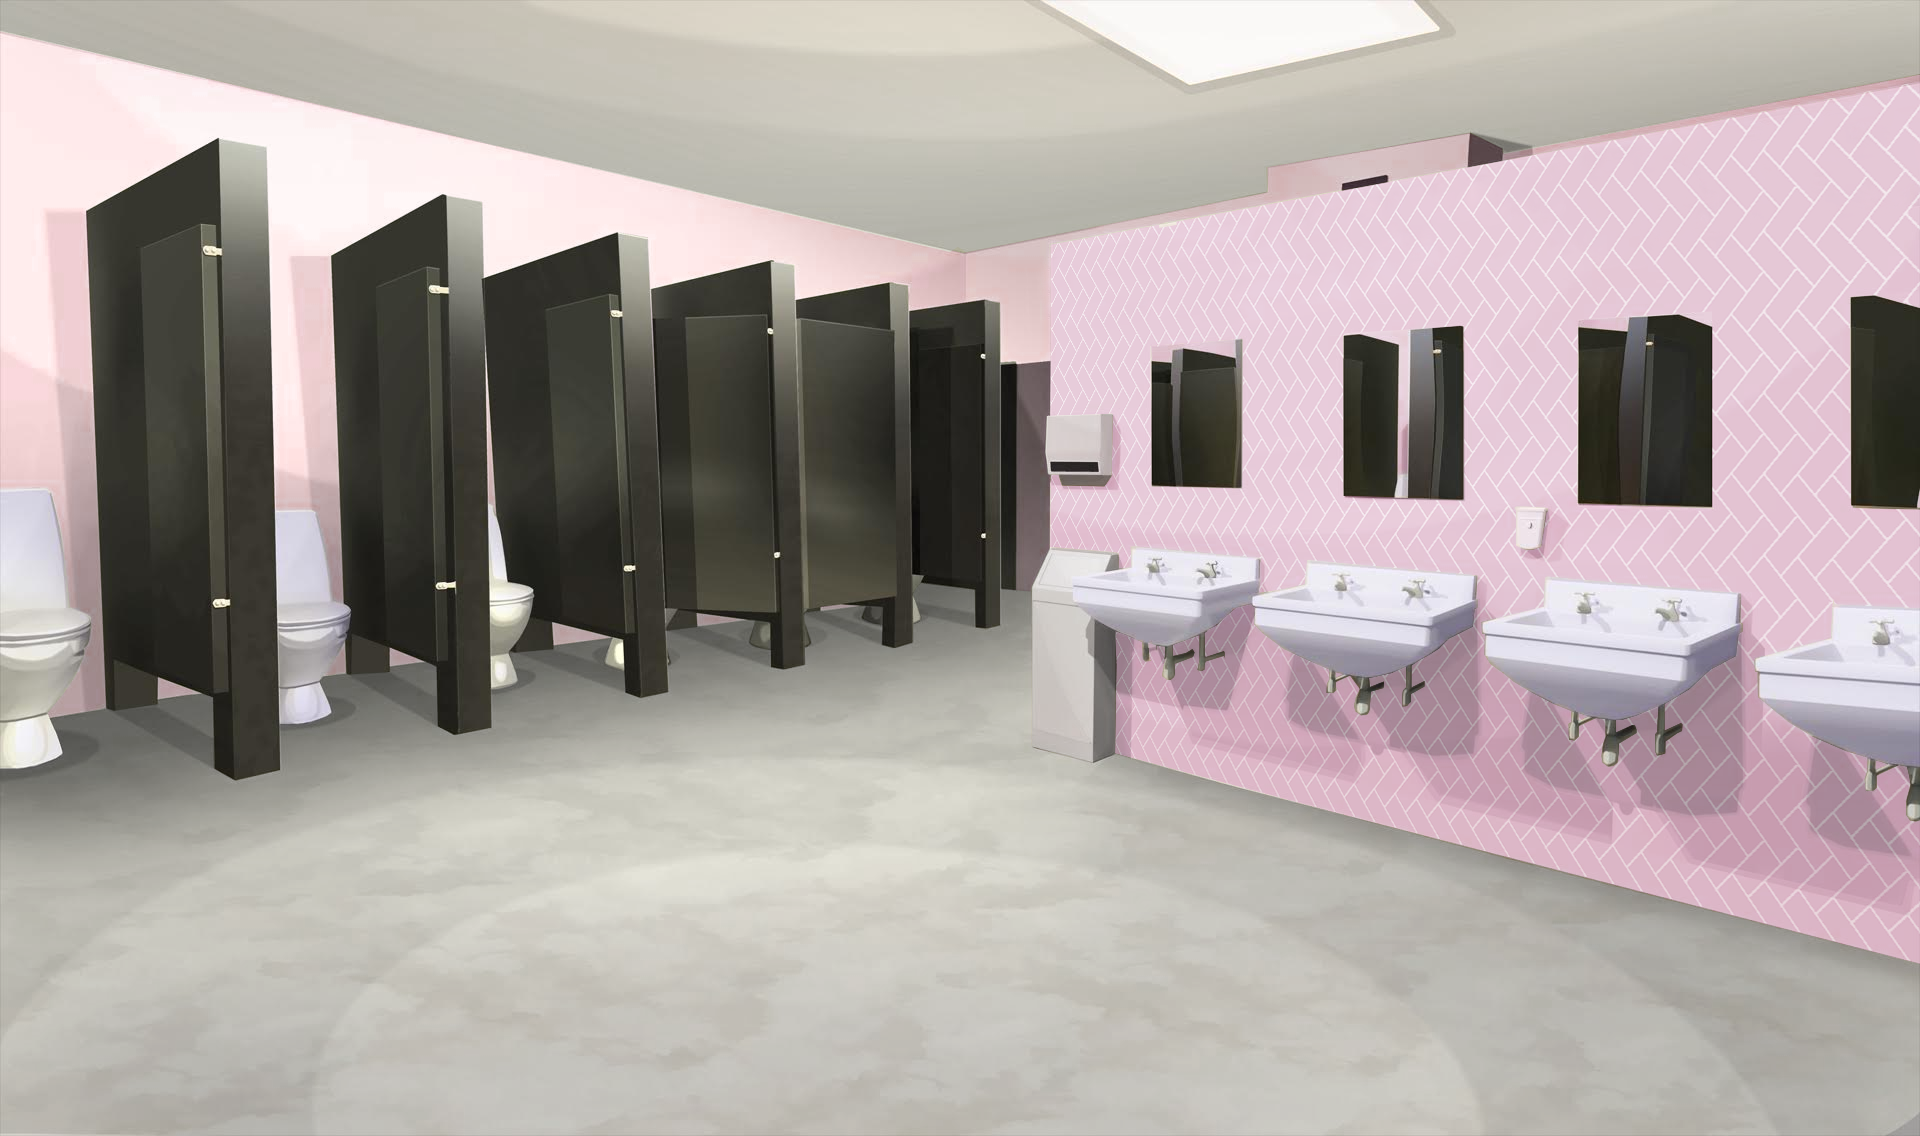 17 ACNH Bathroom Ideas & Design Tips For Your Interiors – FandomSpot